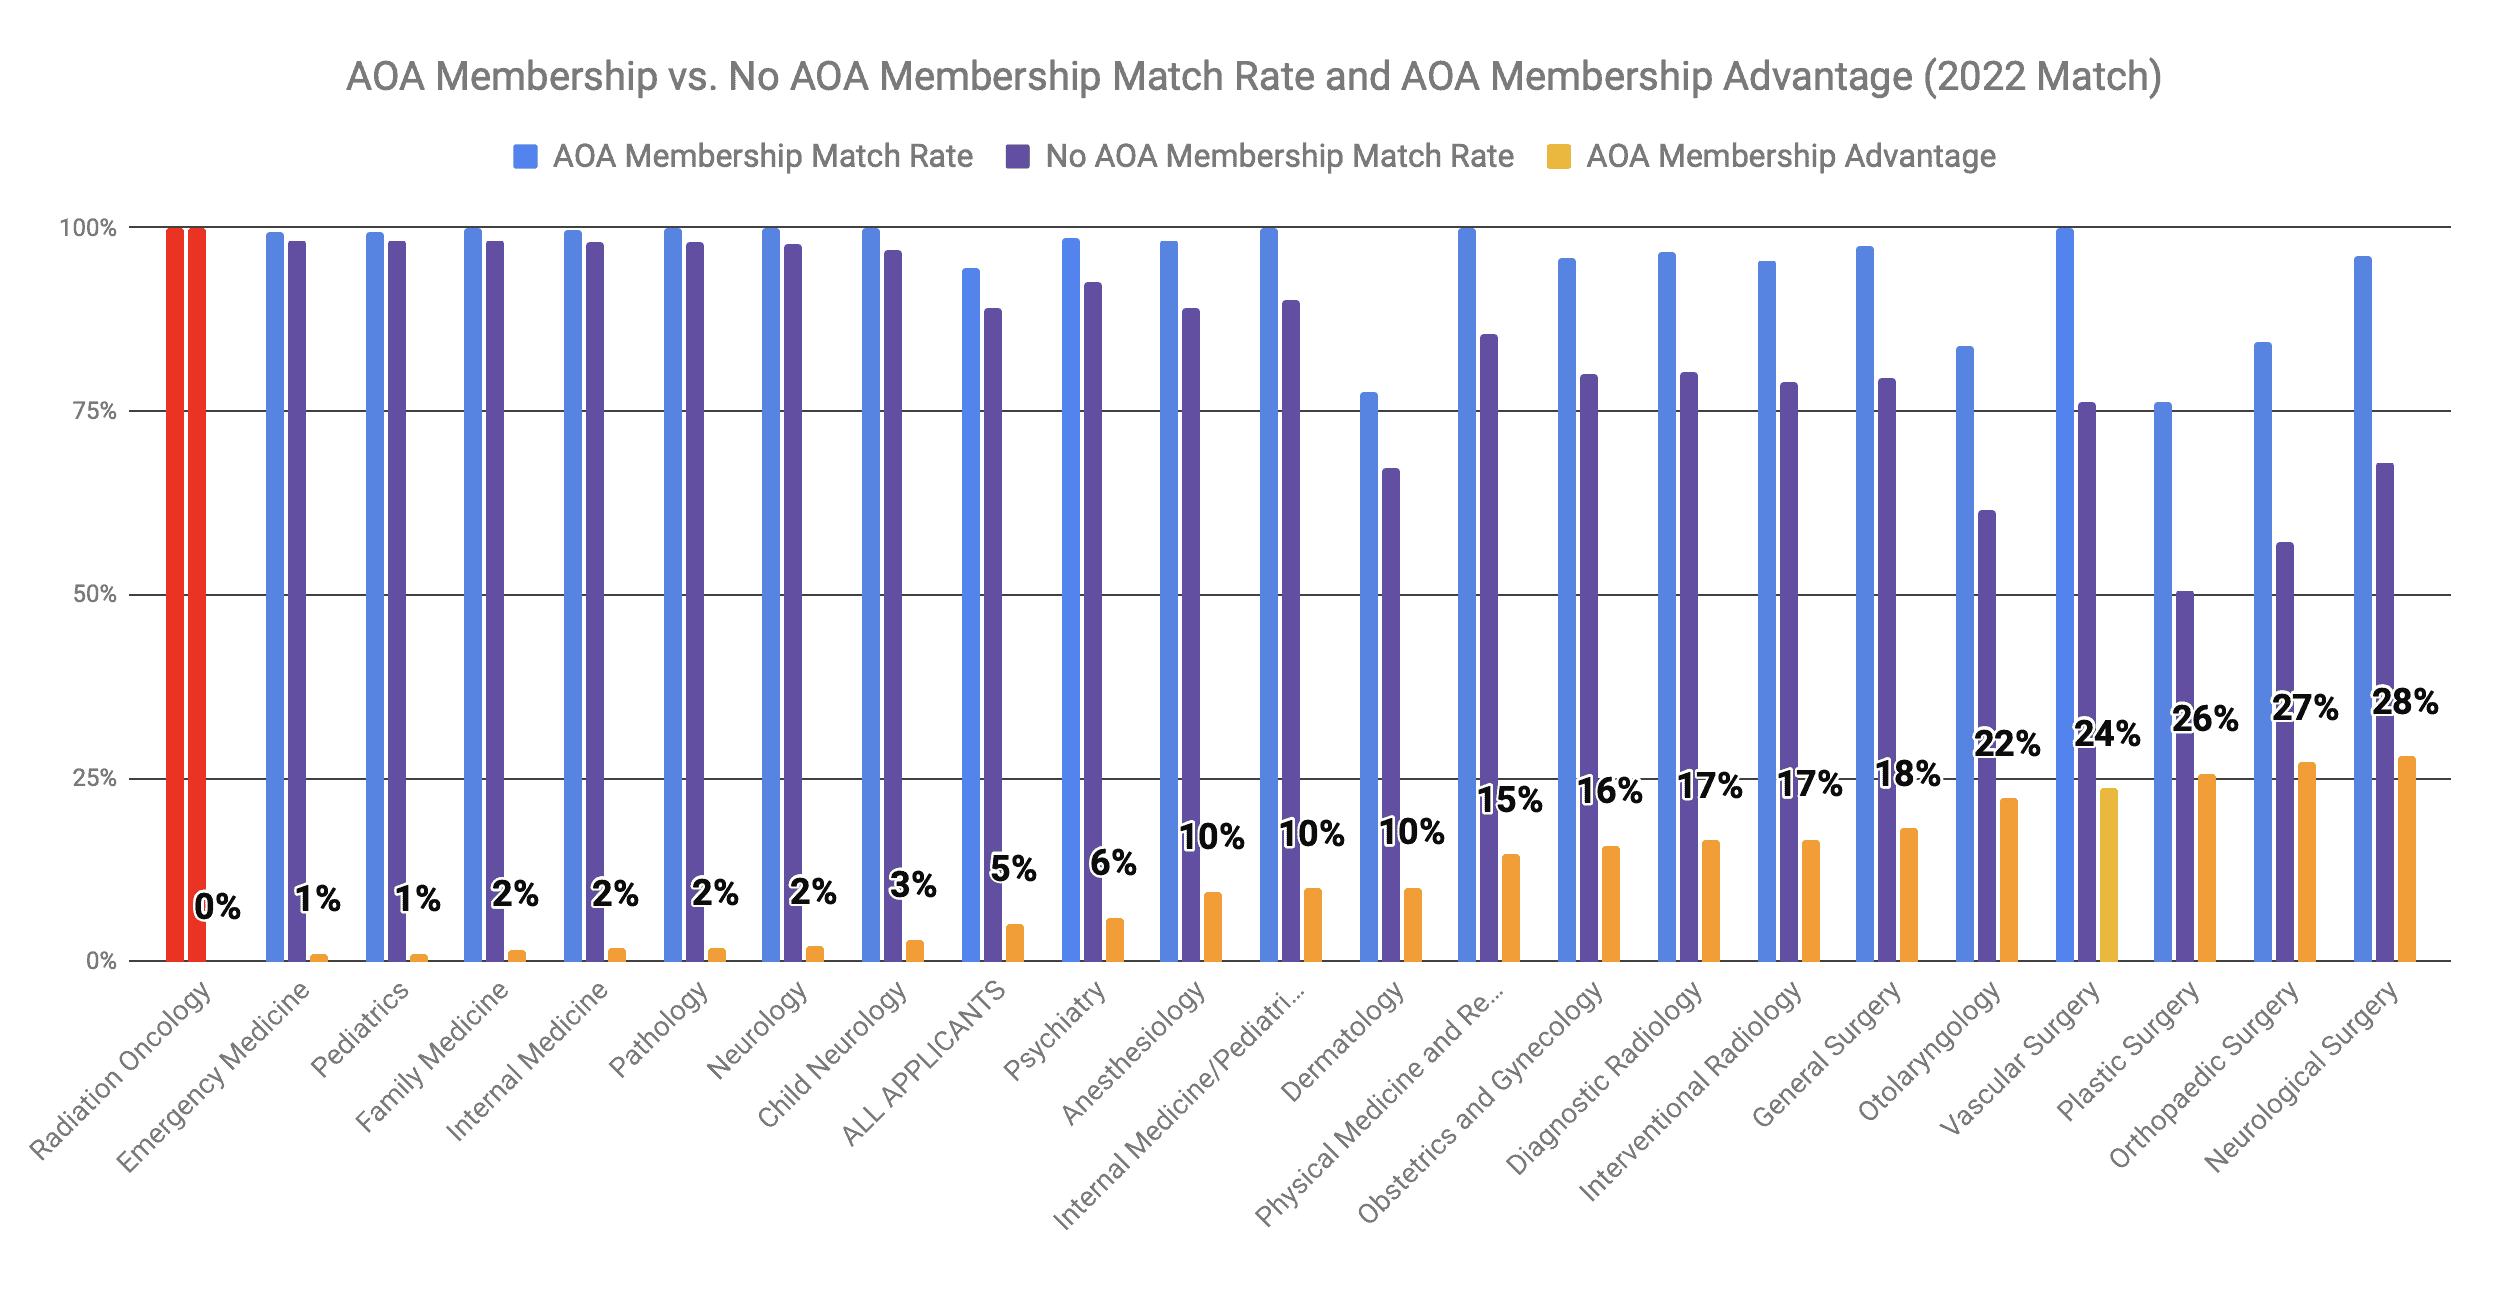 AOA Membership Advantage for Radiation Oncology 2022